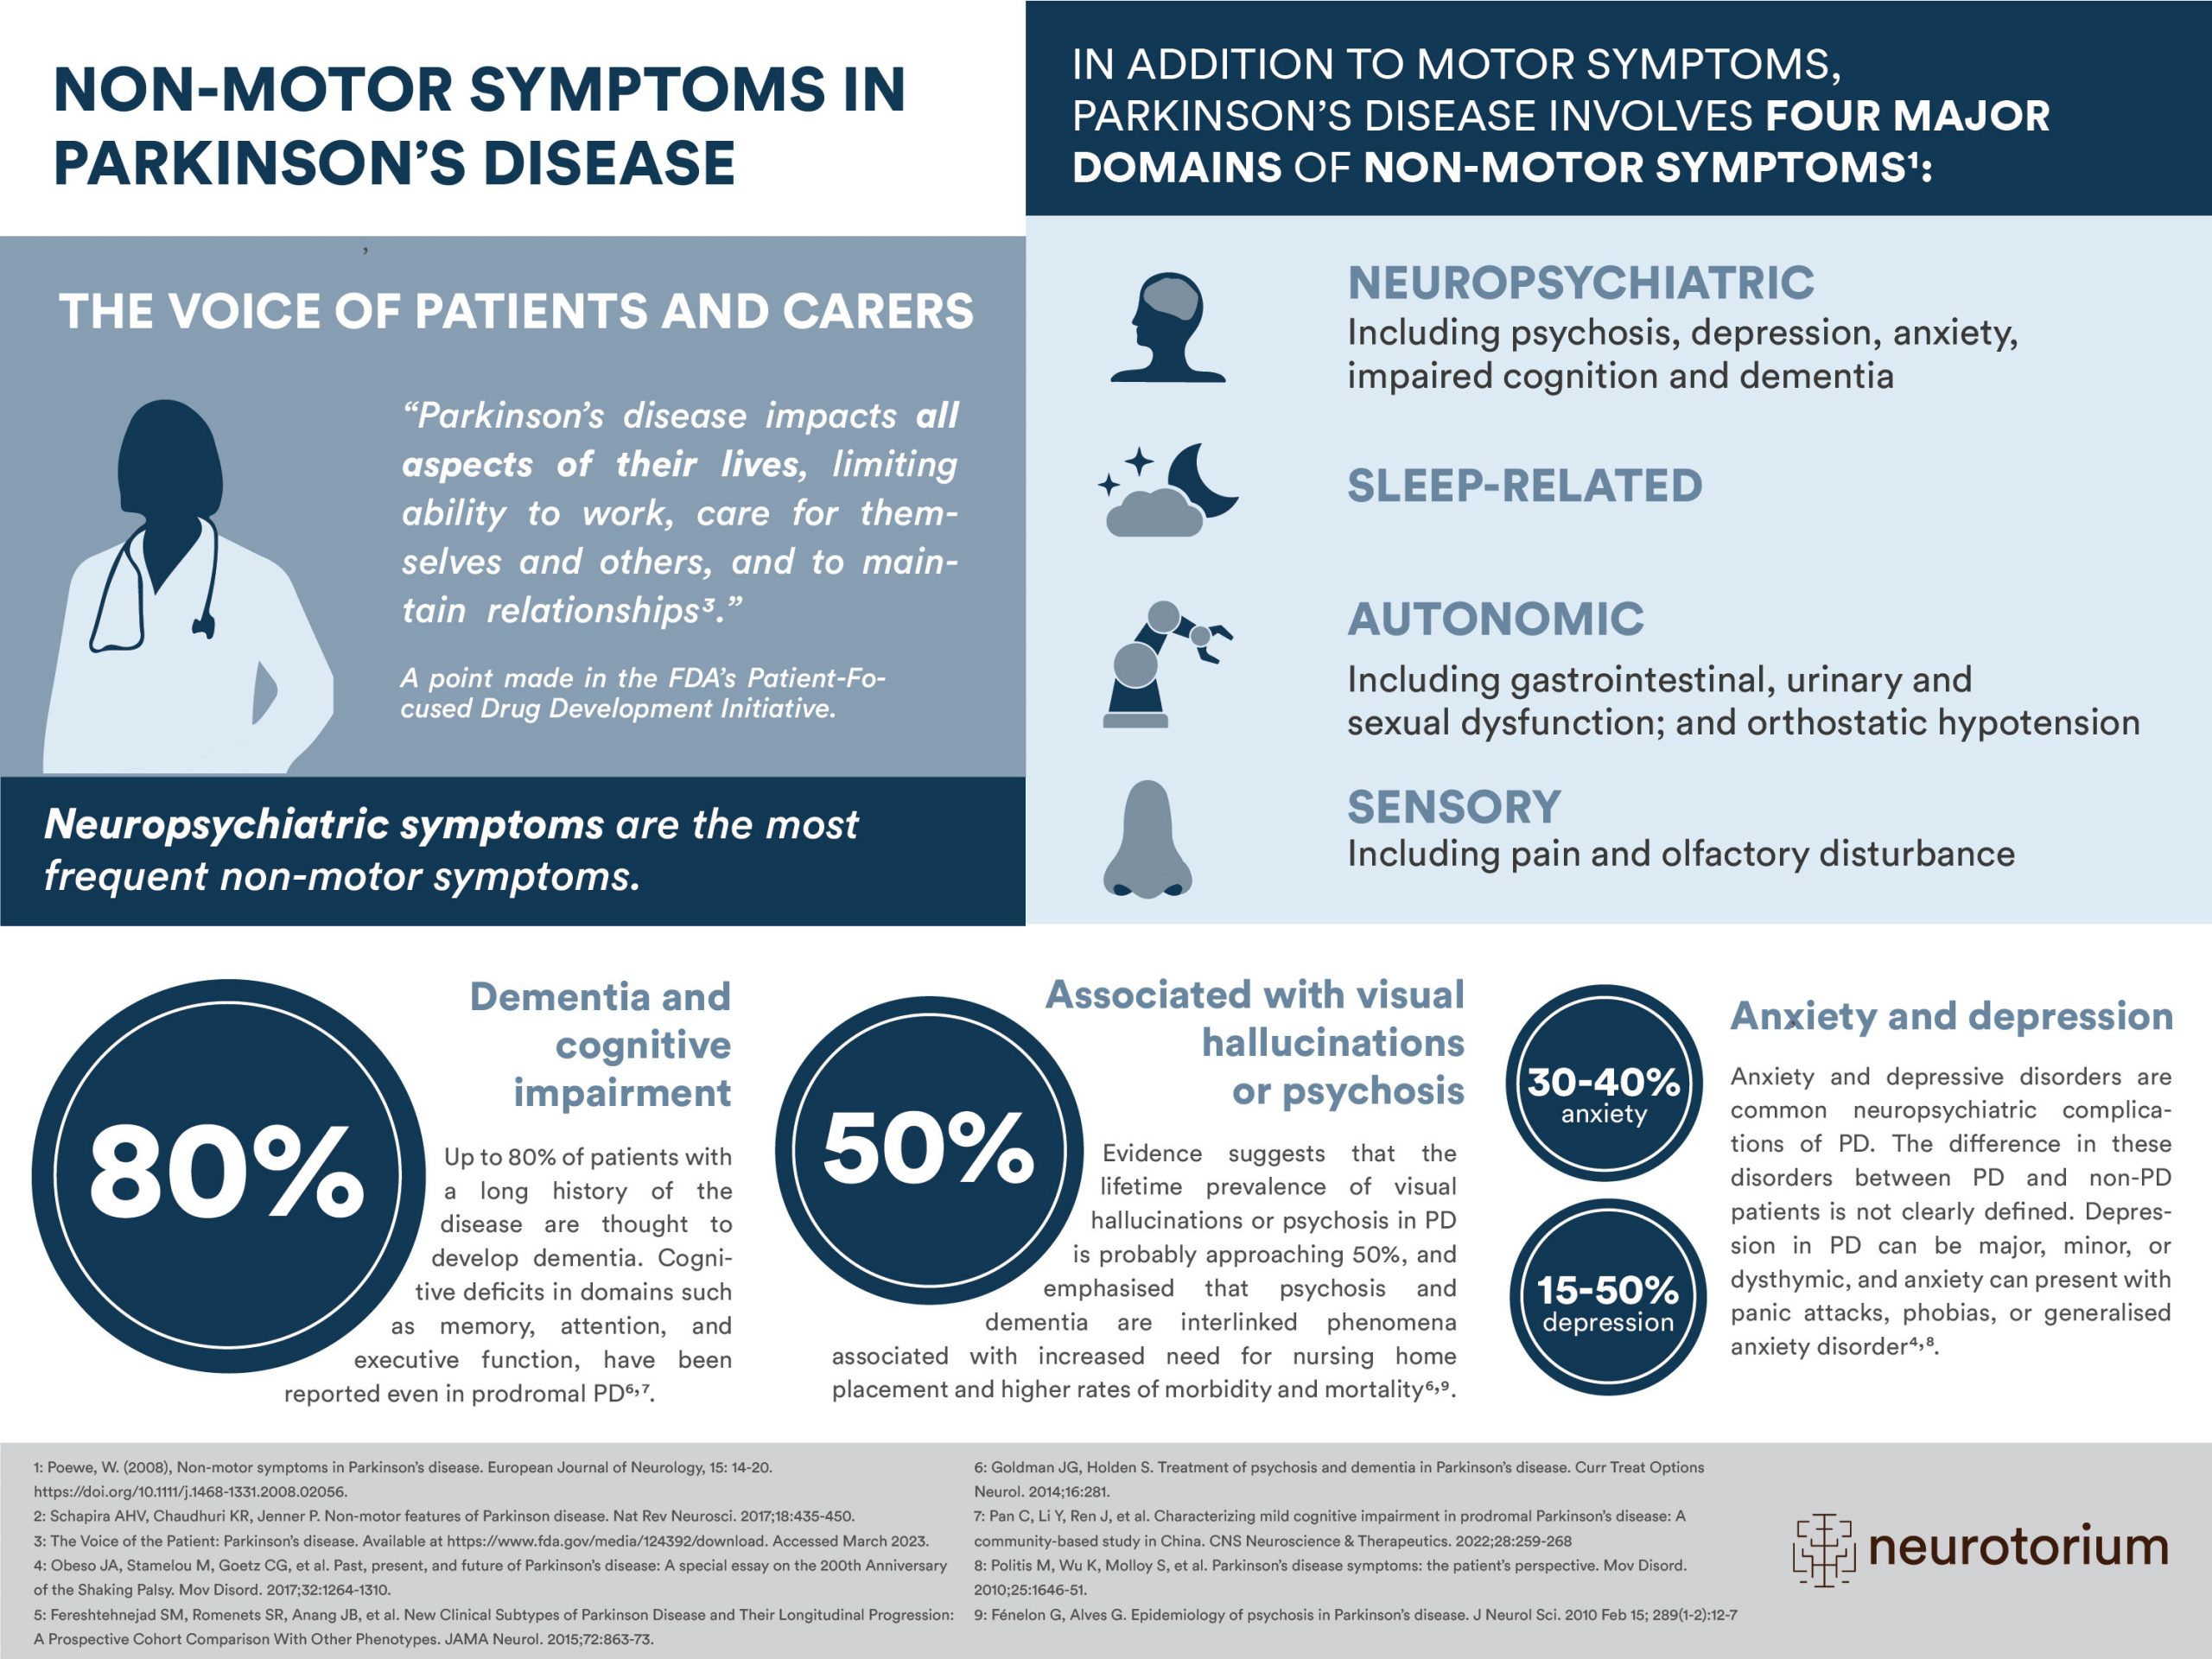 Non-motor symptoms within Parkinsons disease